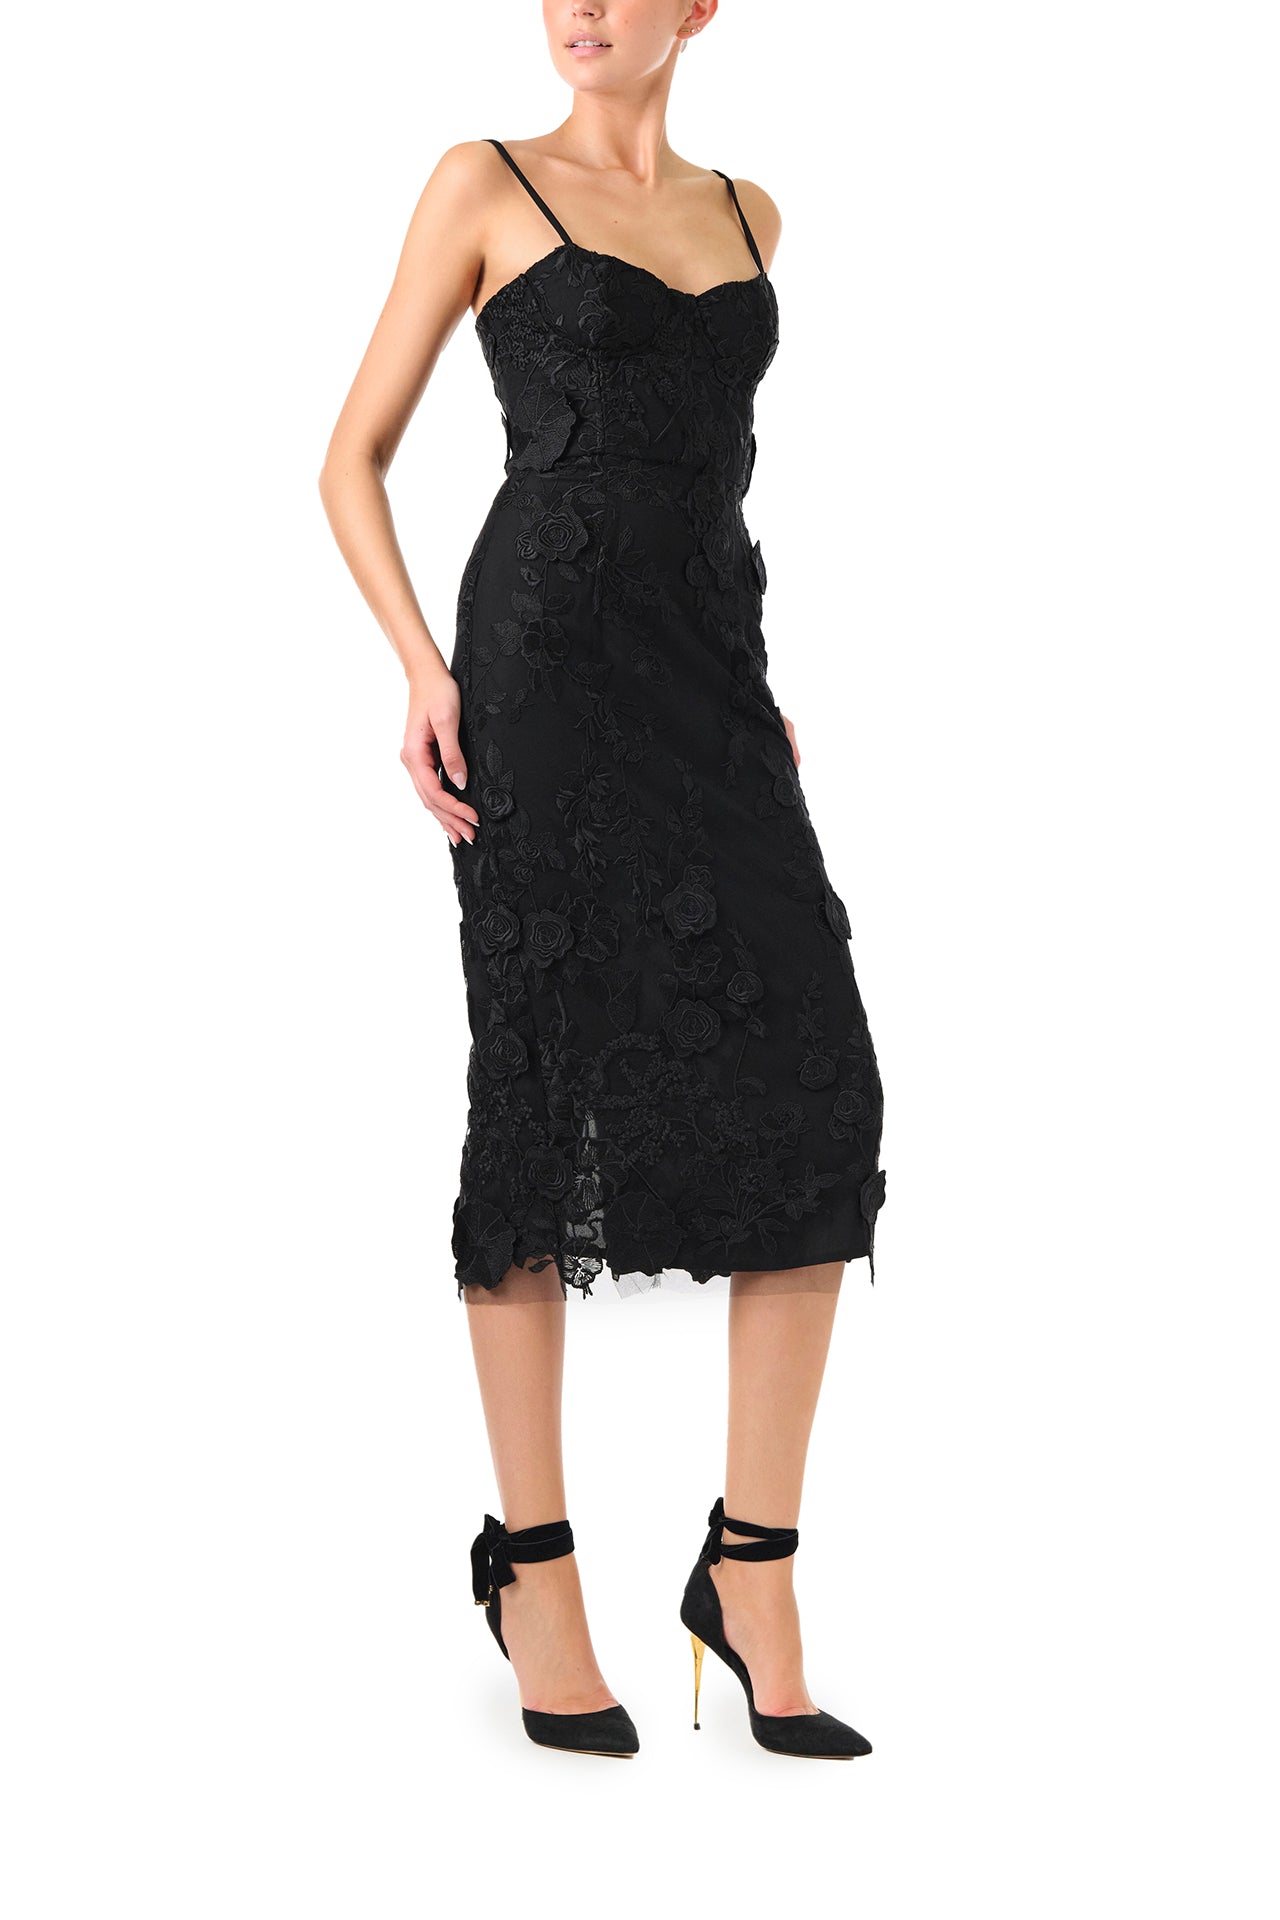 Monique Lhuillier Fall 2024 spaghetti strap lace midi dress with corseted bodice in Noir 3D lace- right side.